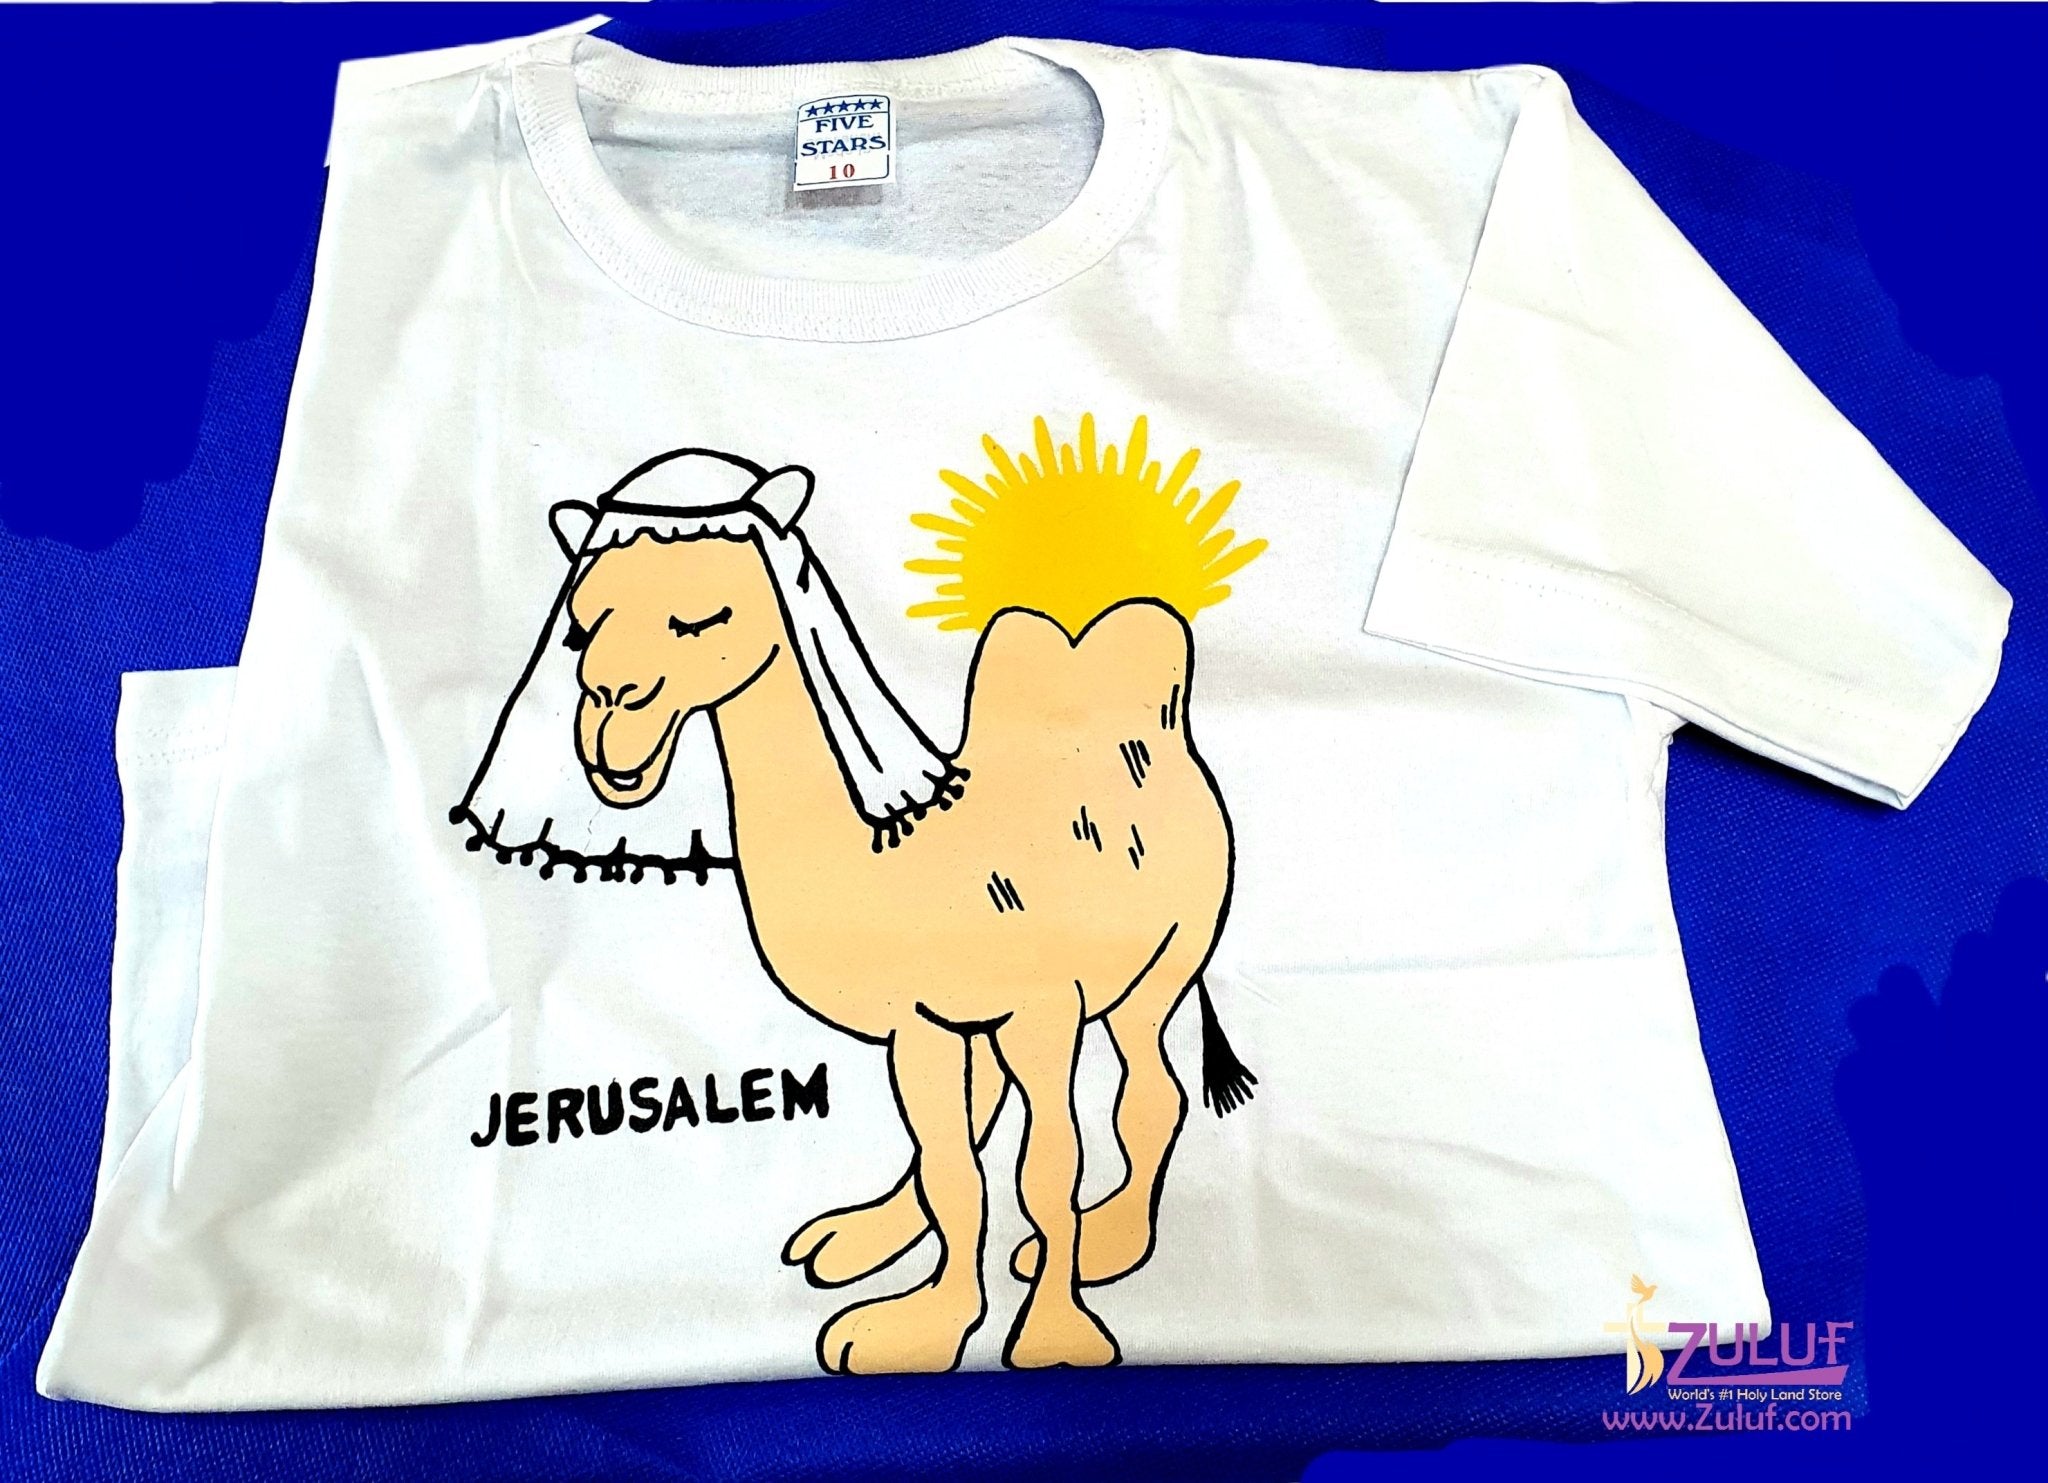 Camel of Jerusalem kids T.shirt TSH004 - Zuluf